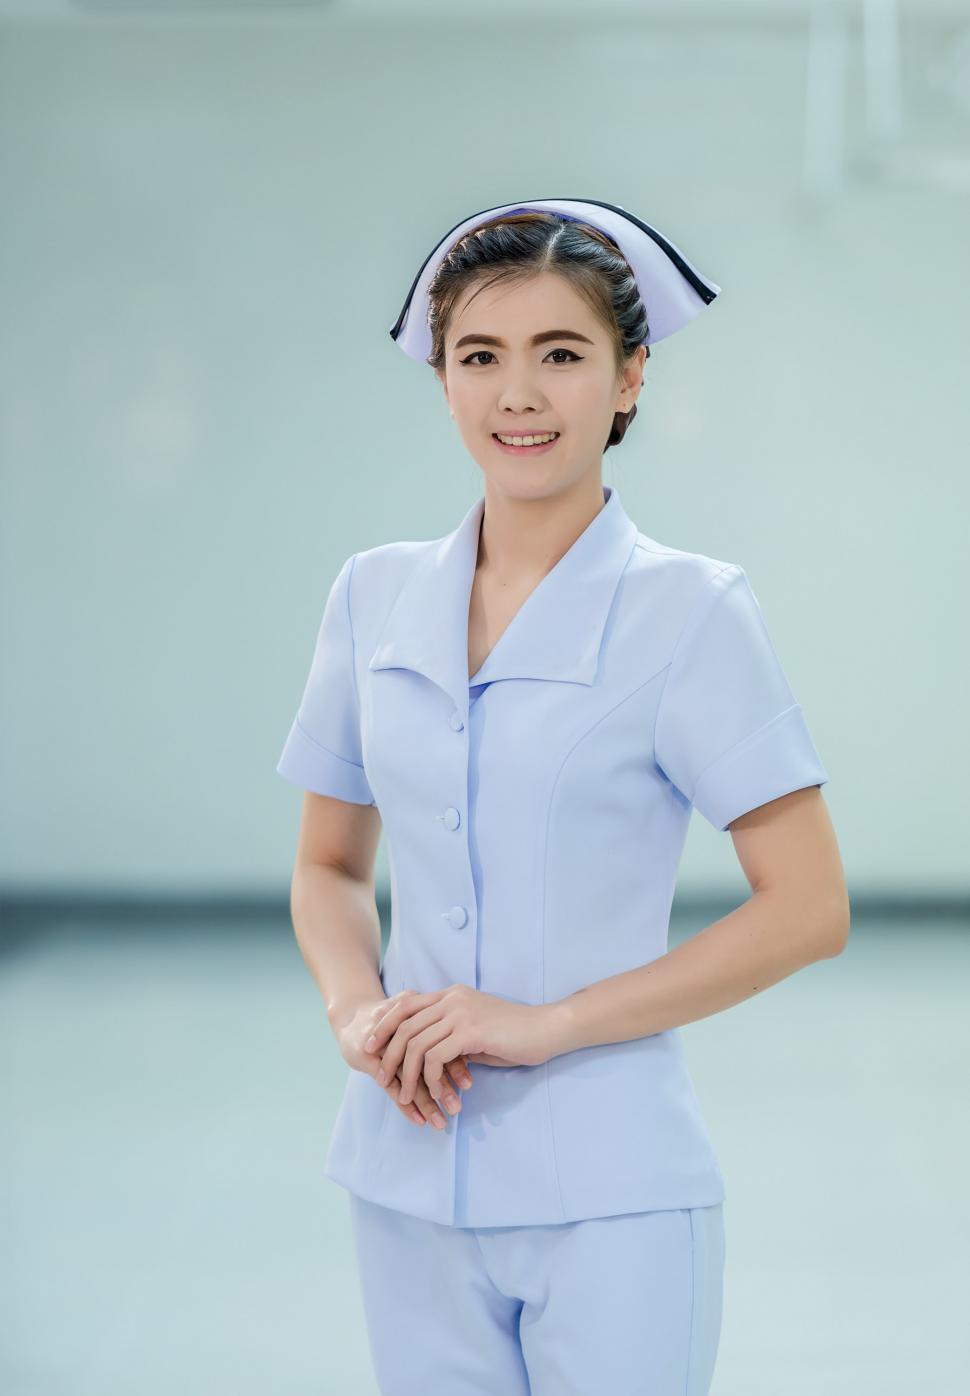 Free Image of Asian Nurse 